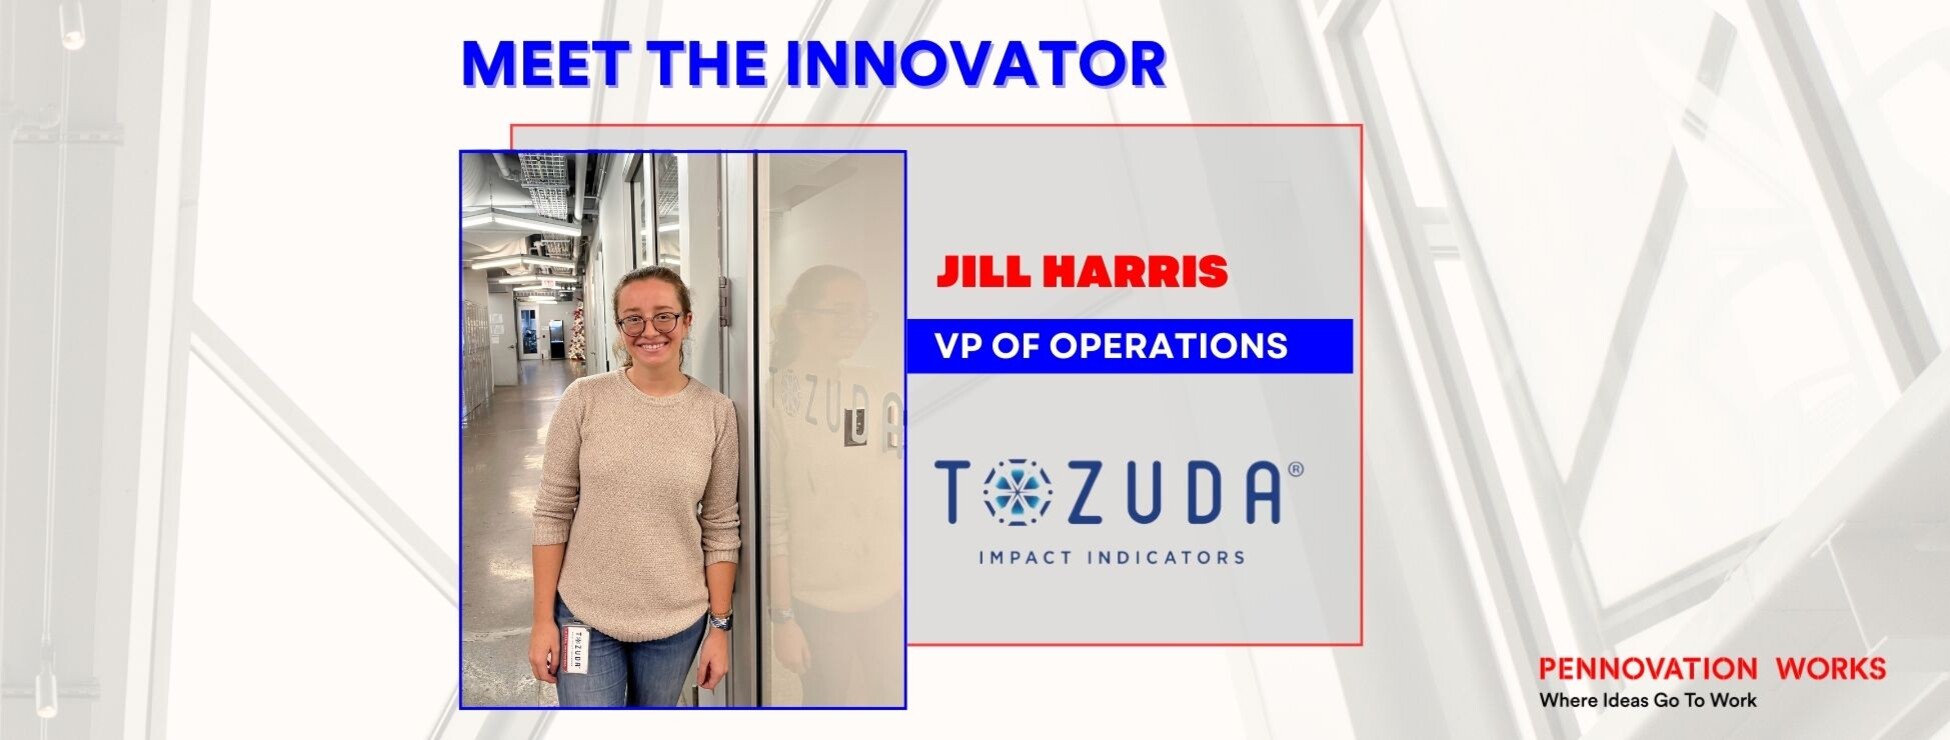 Meet the Innovator: Tozuda 